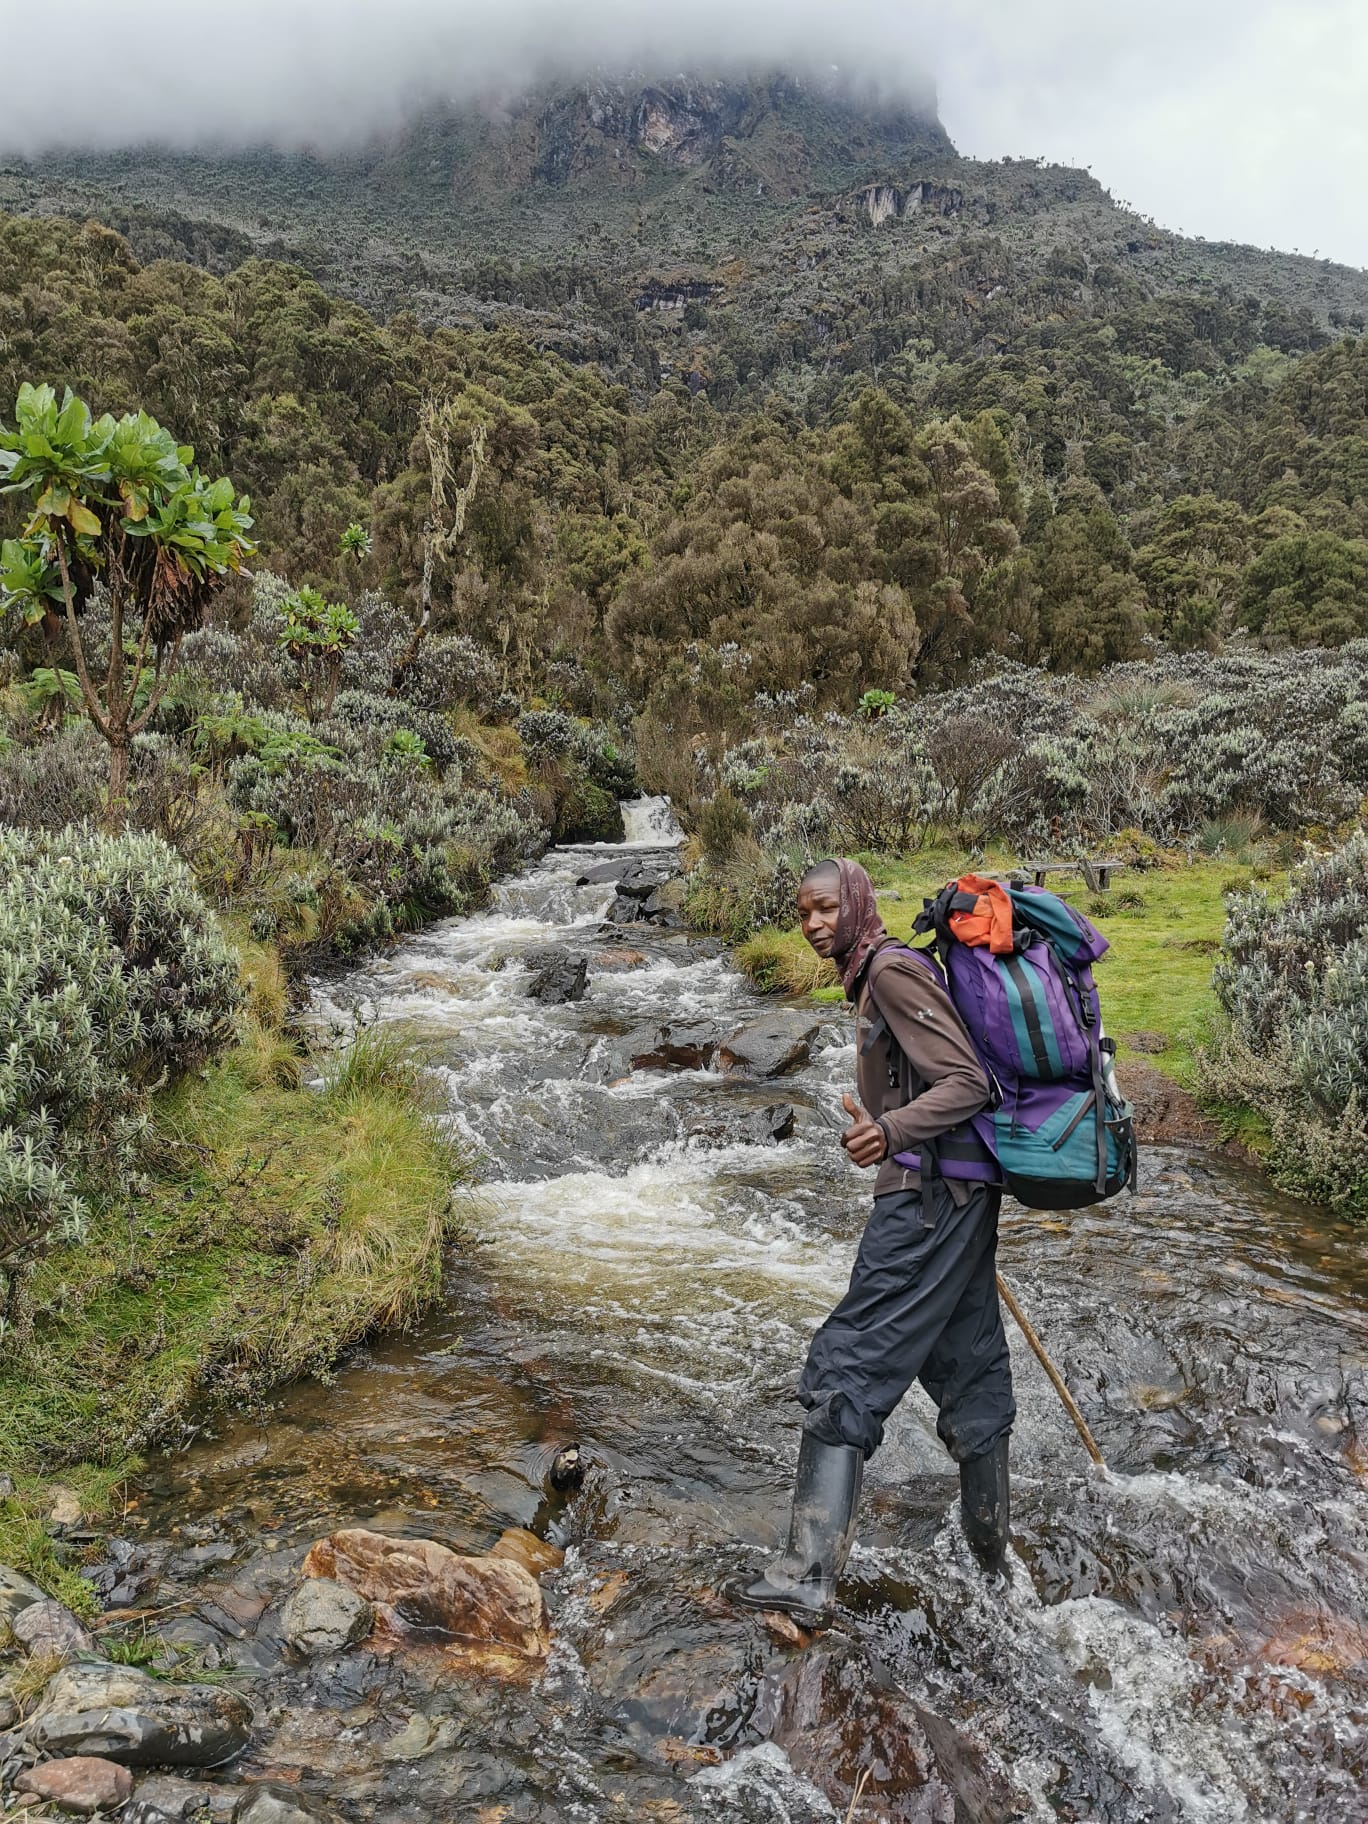 tracking the mountain Musaze in Rwanda on Golden monkey tracking